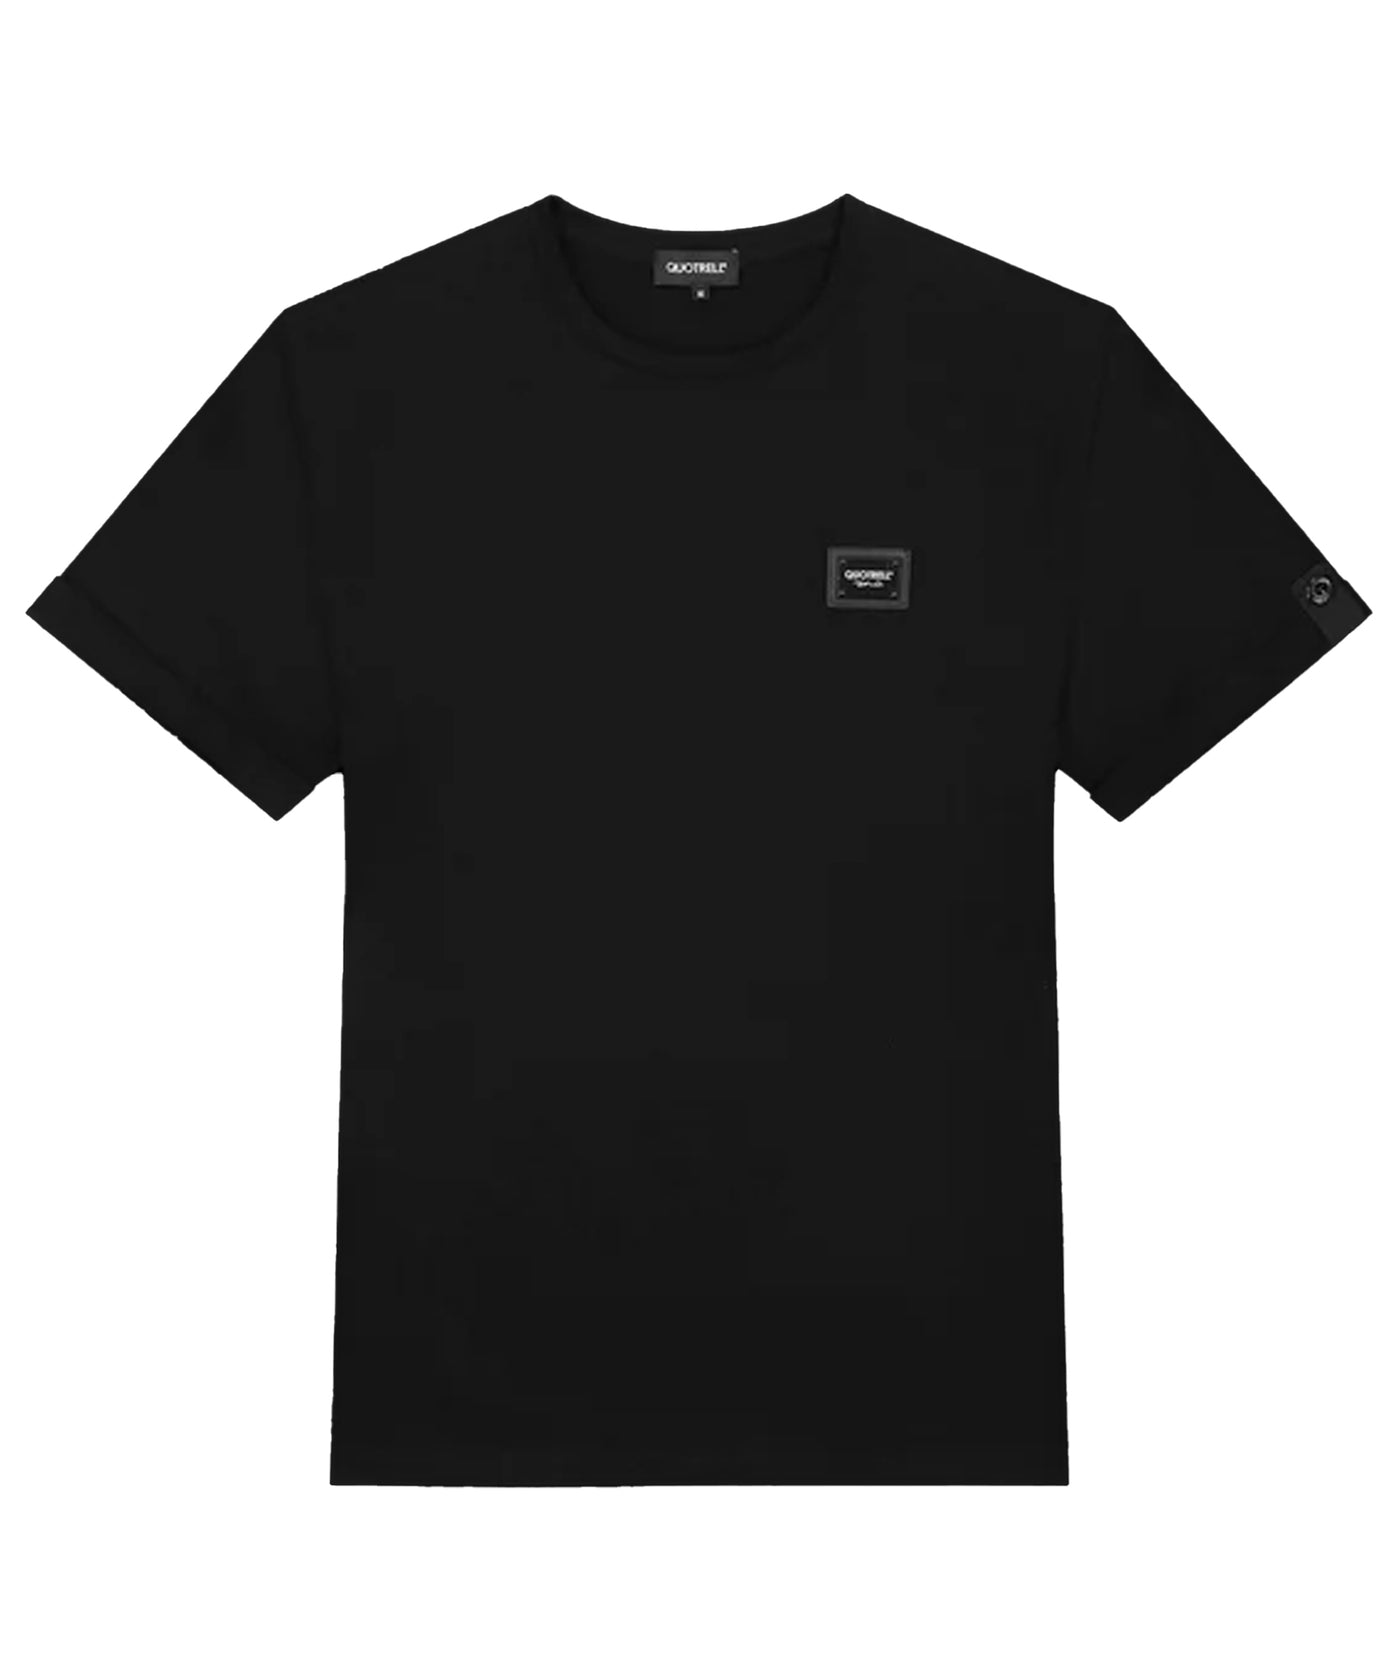 Quotrell - Sacramento - T-shirt - Balck/black